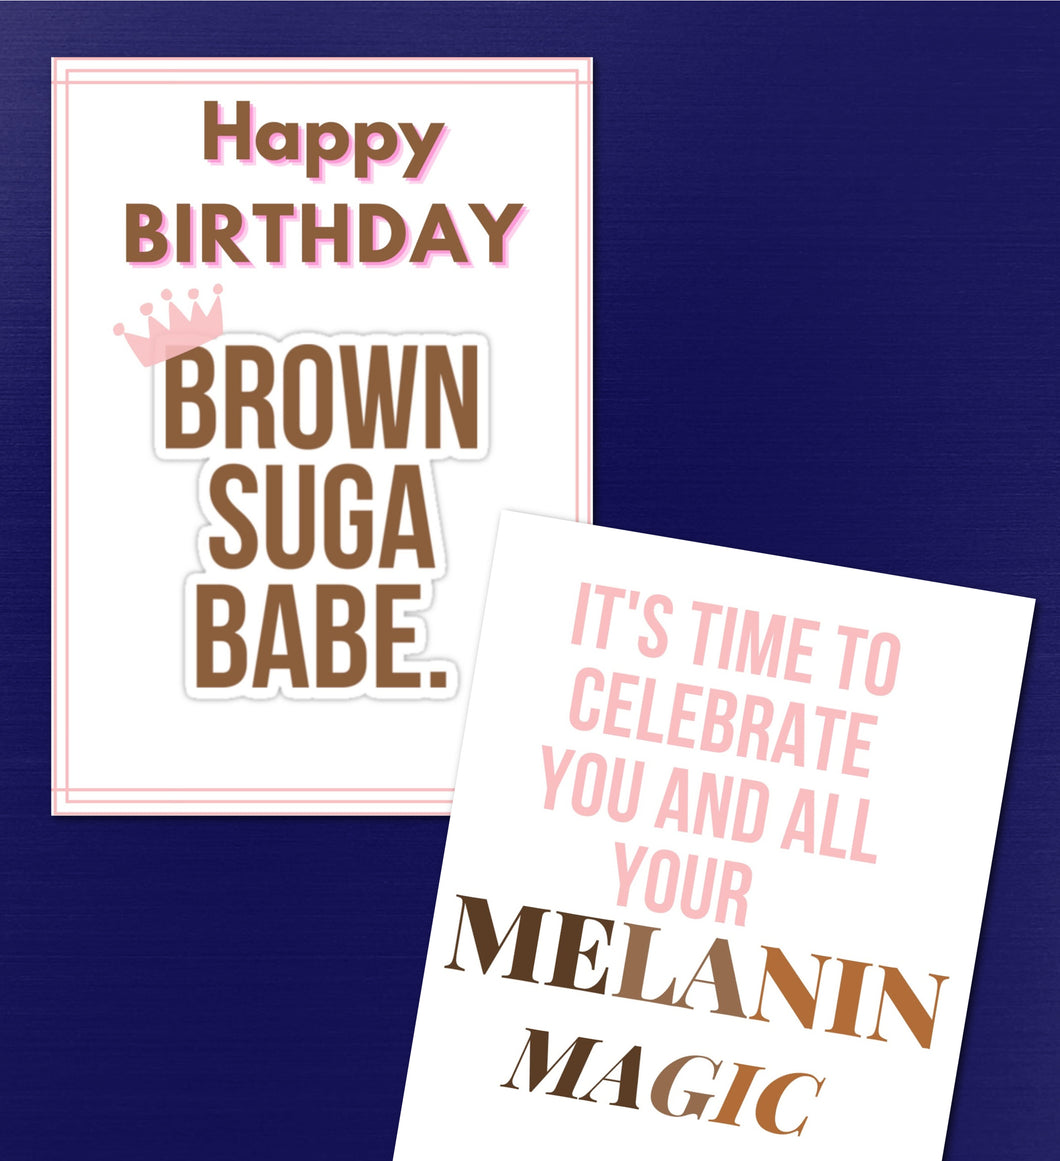 Brown Suga Babe Birthday Card